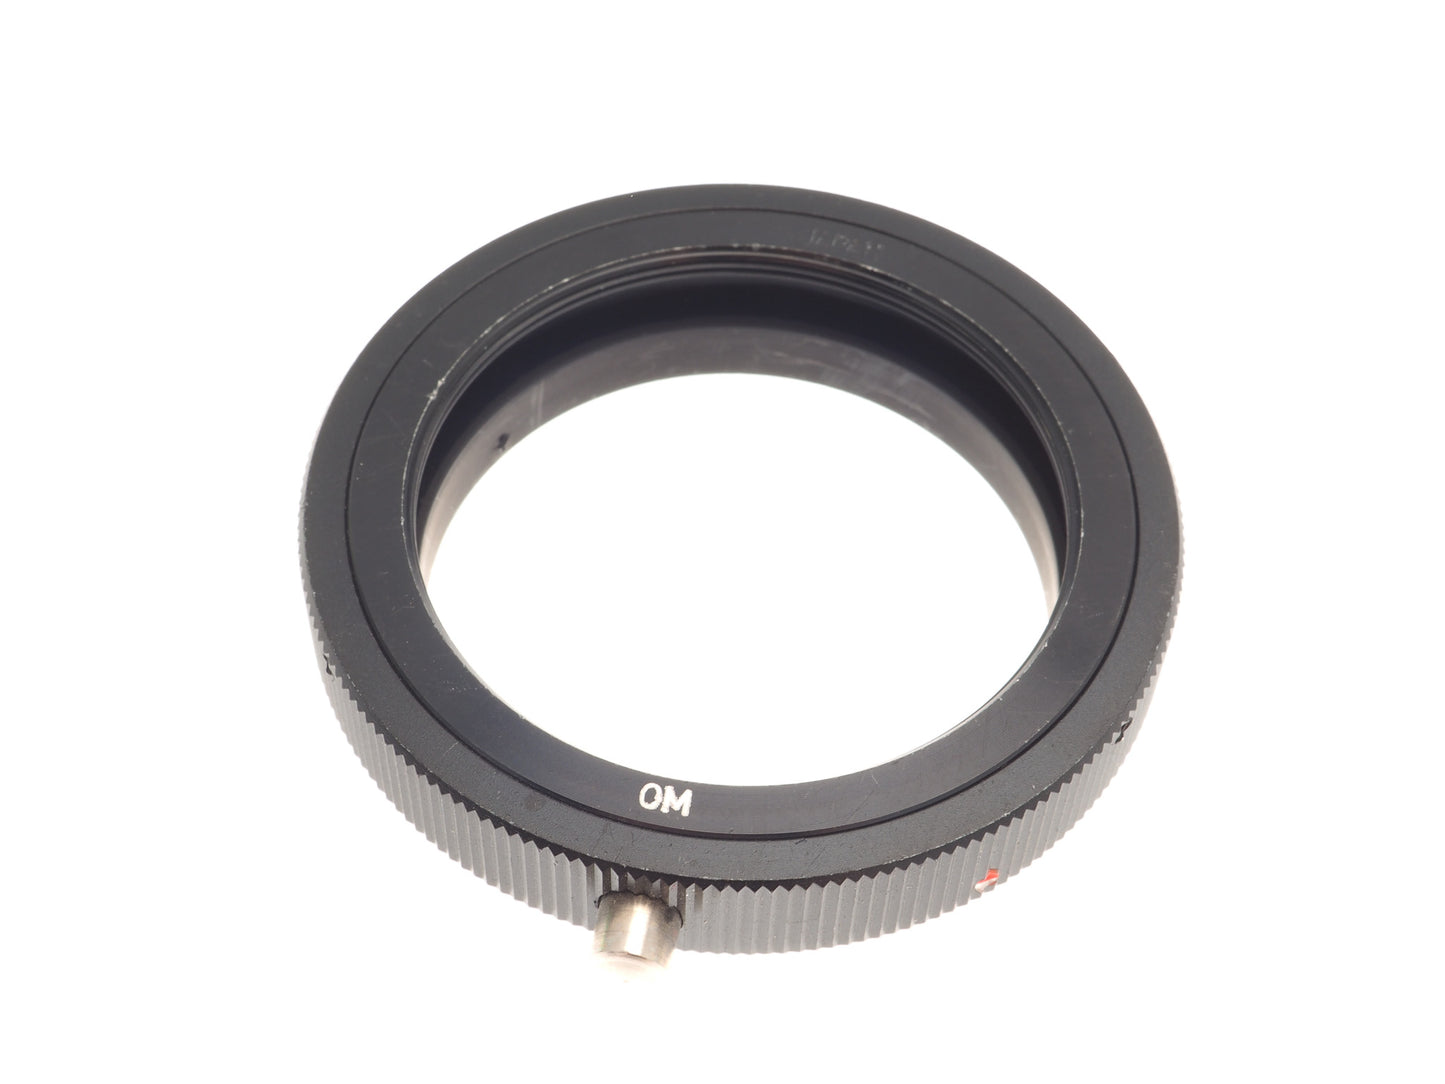 Generic T2 - OM Adapter - Lens Adapter